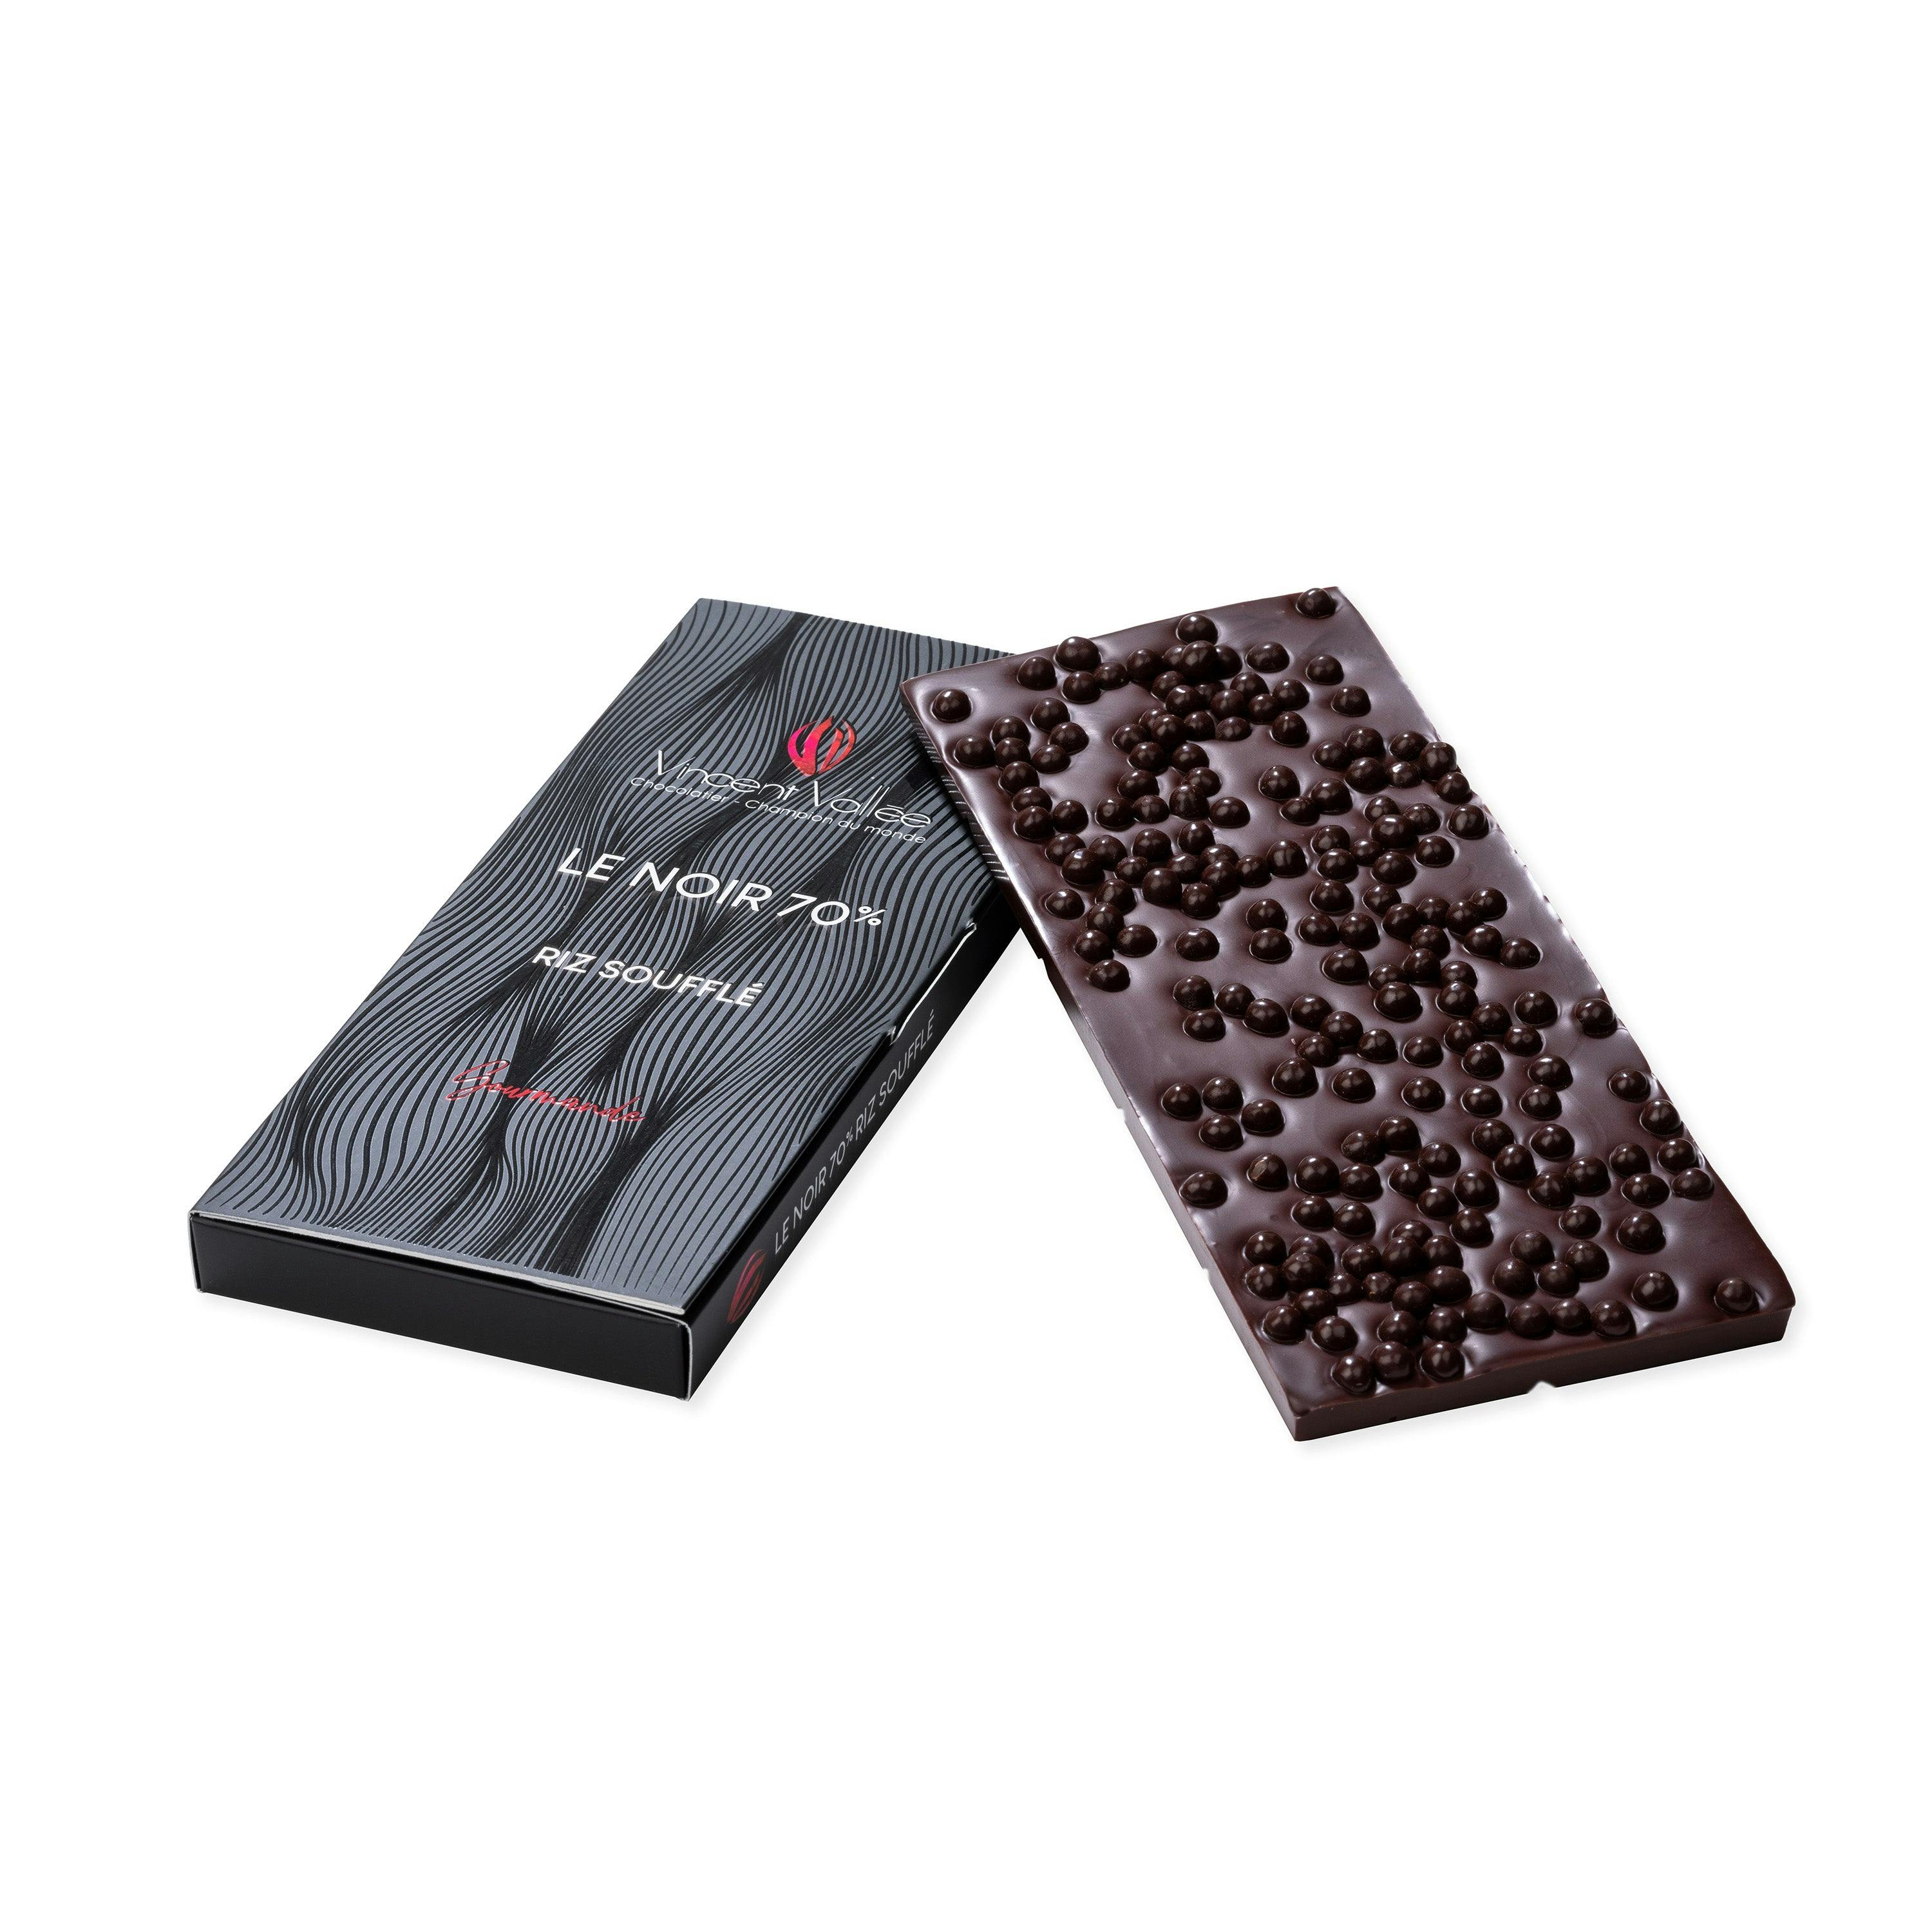 Noir Riz soufflé - Vincent Vallée world champion chocolatier